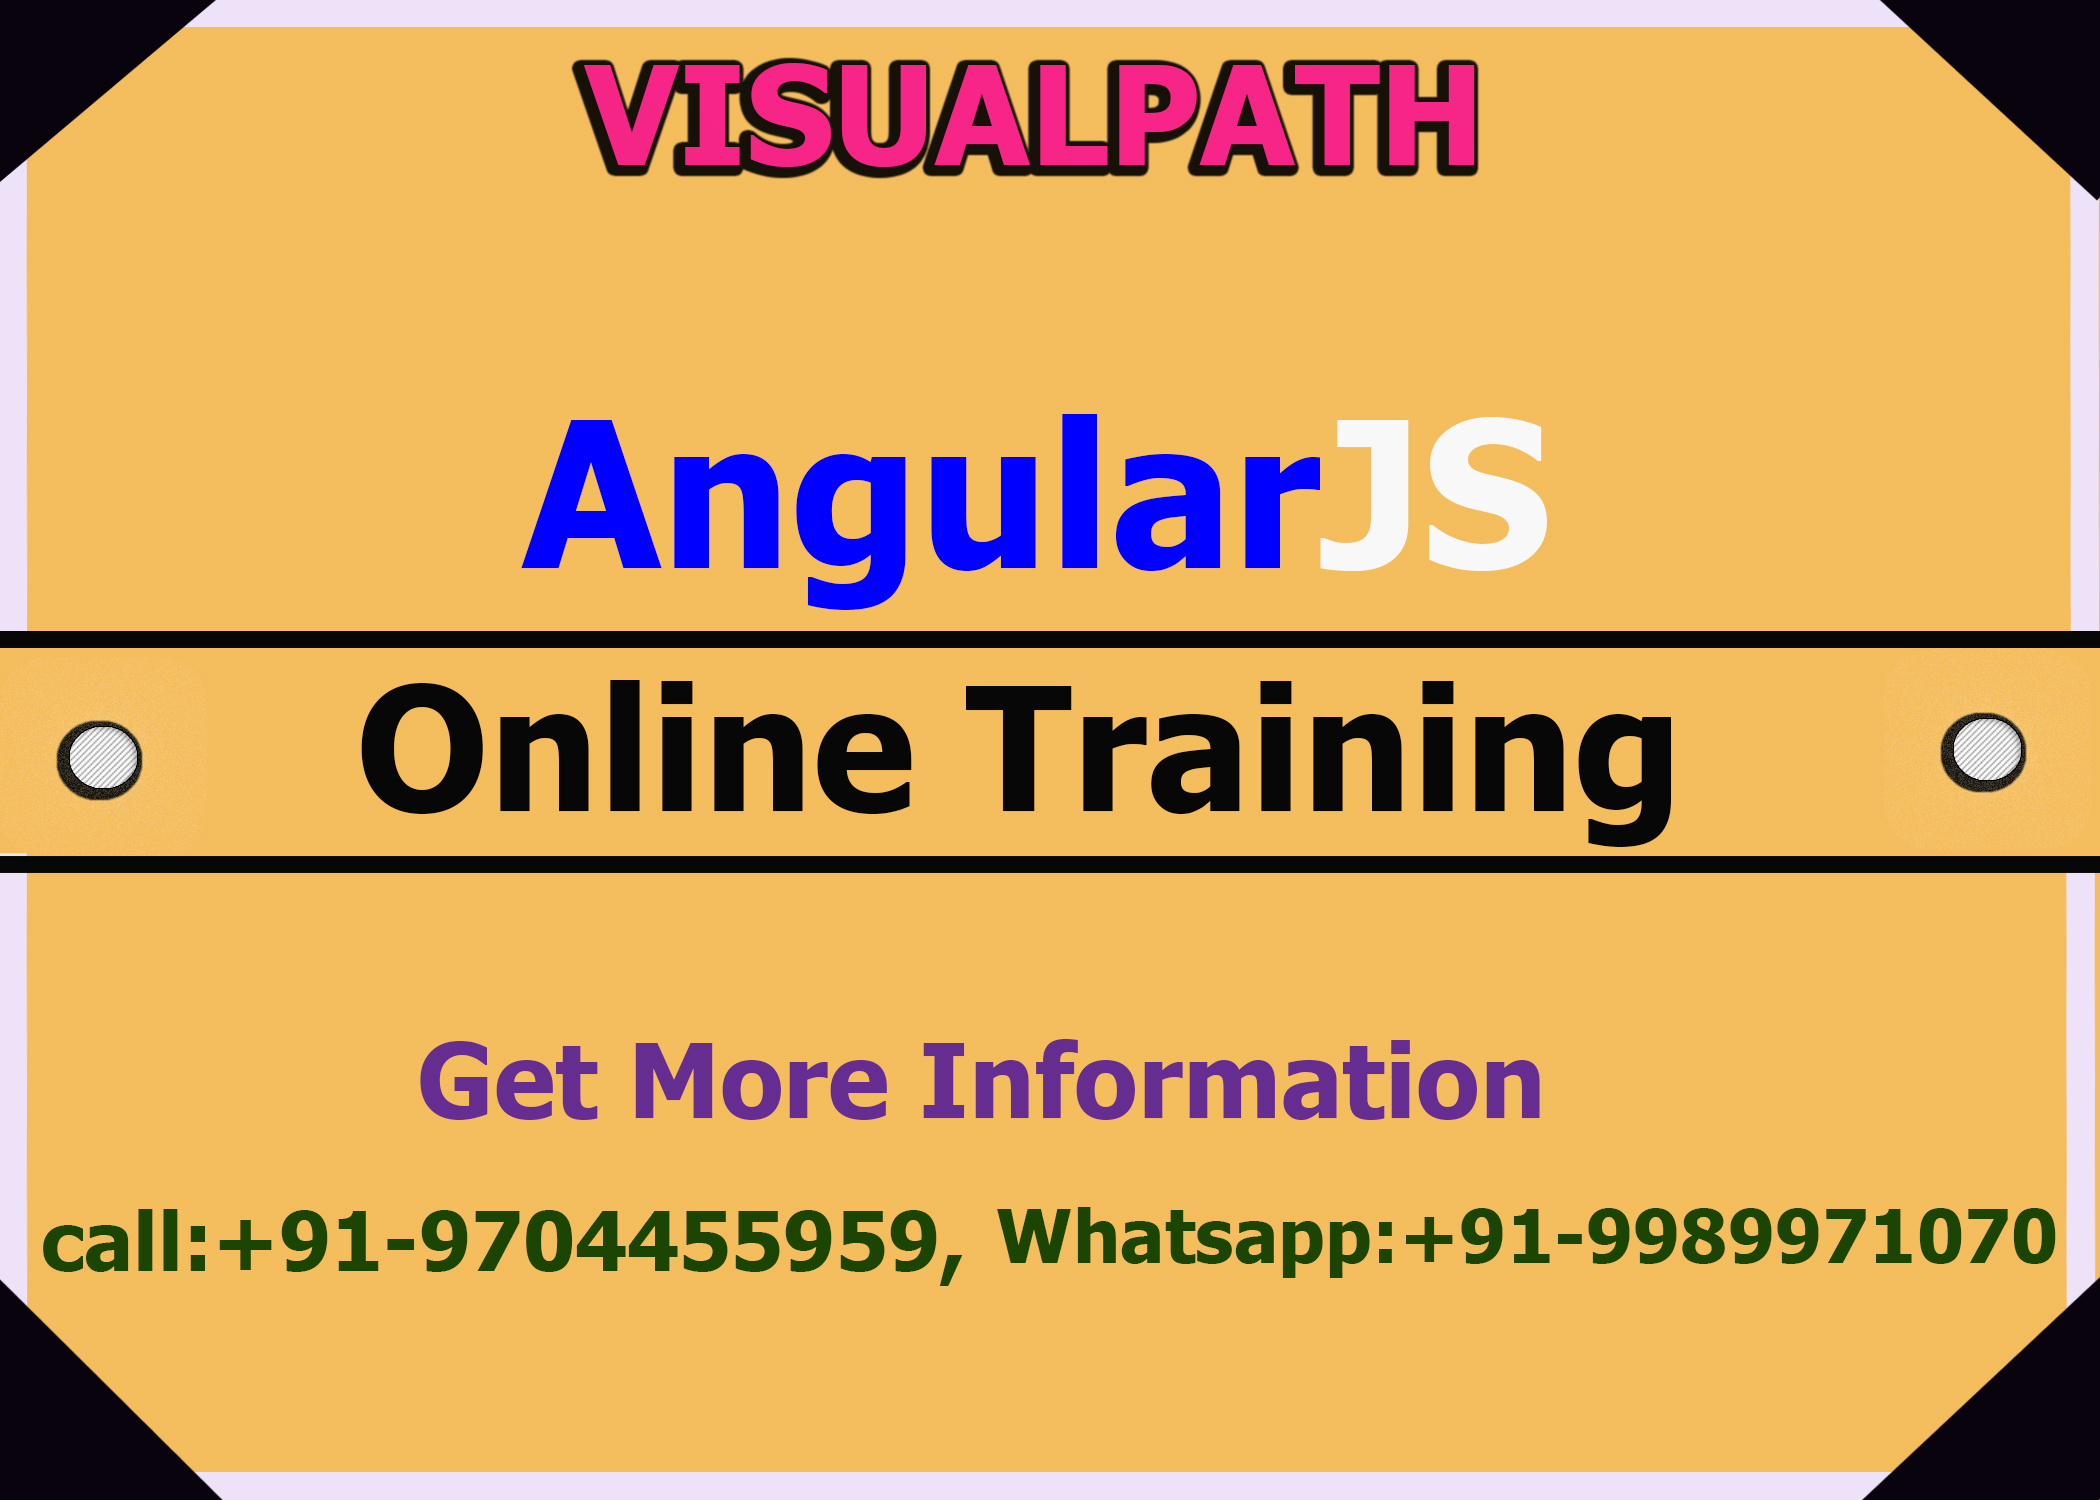 AngularJS Online and Classroom Training in Hyderabad, Hyderabad, Andhra Pradesh, India